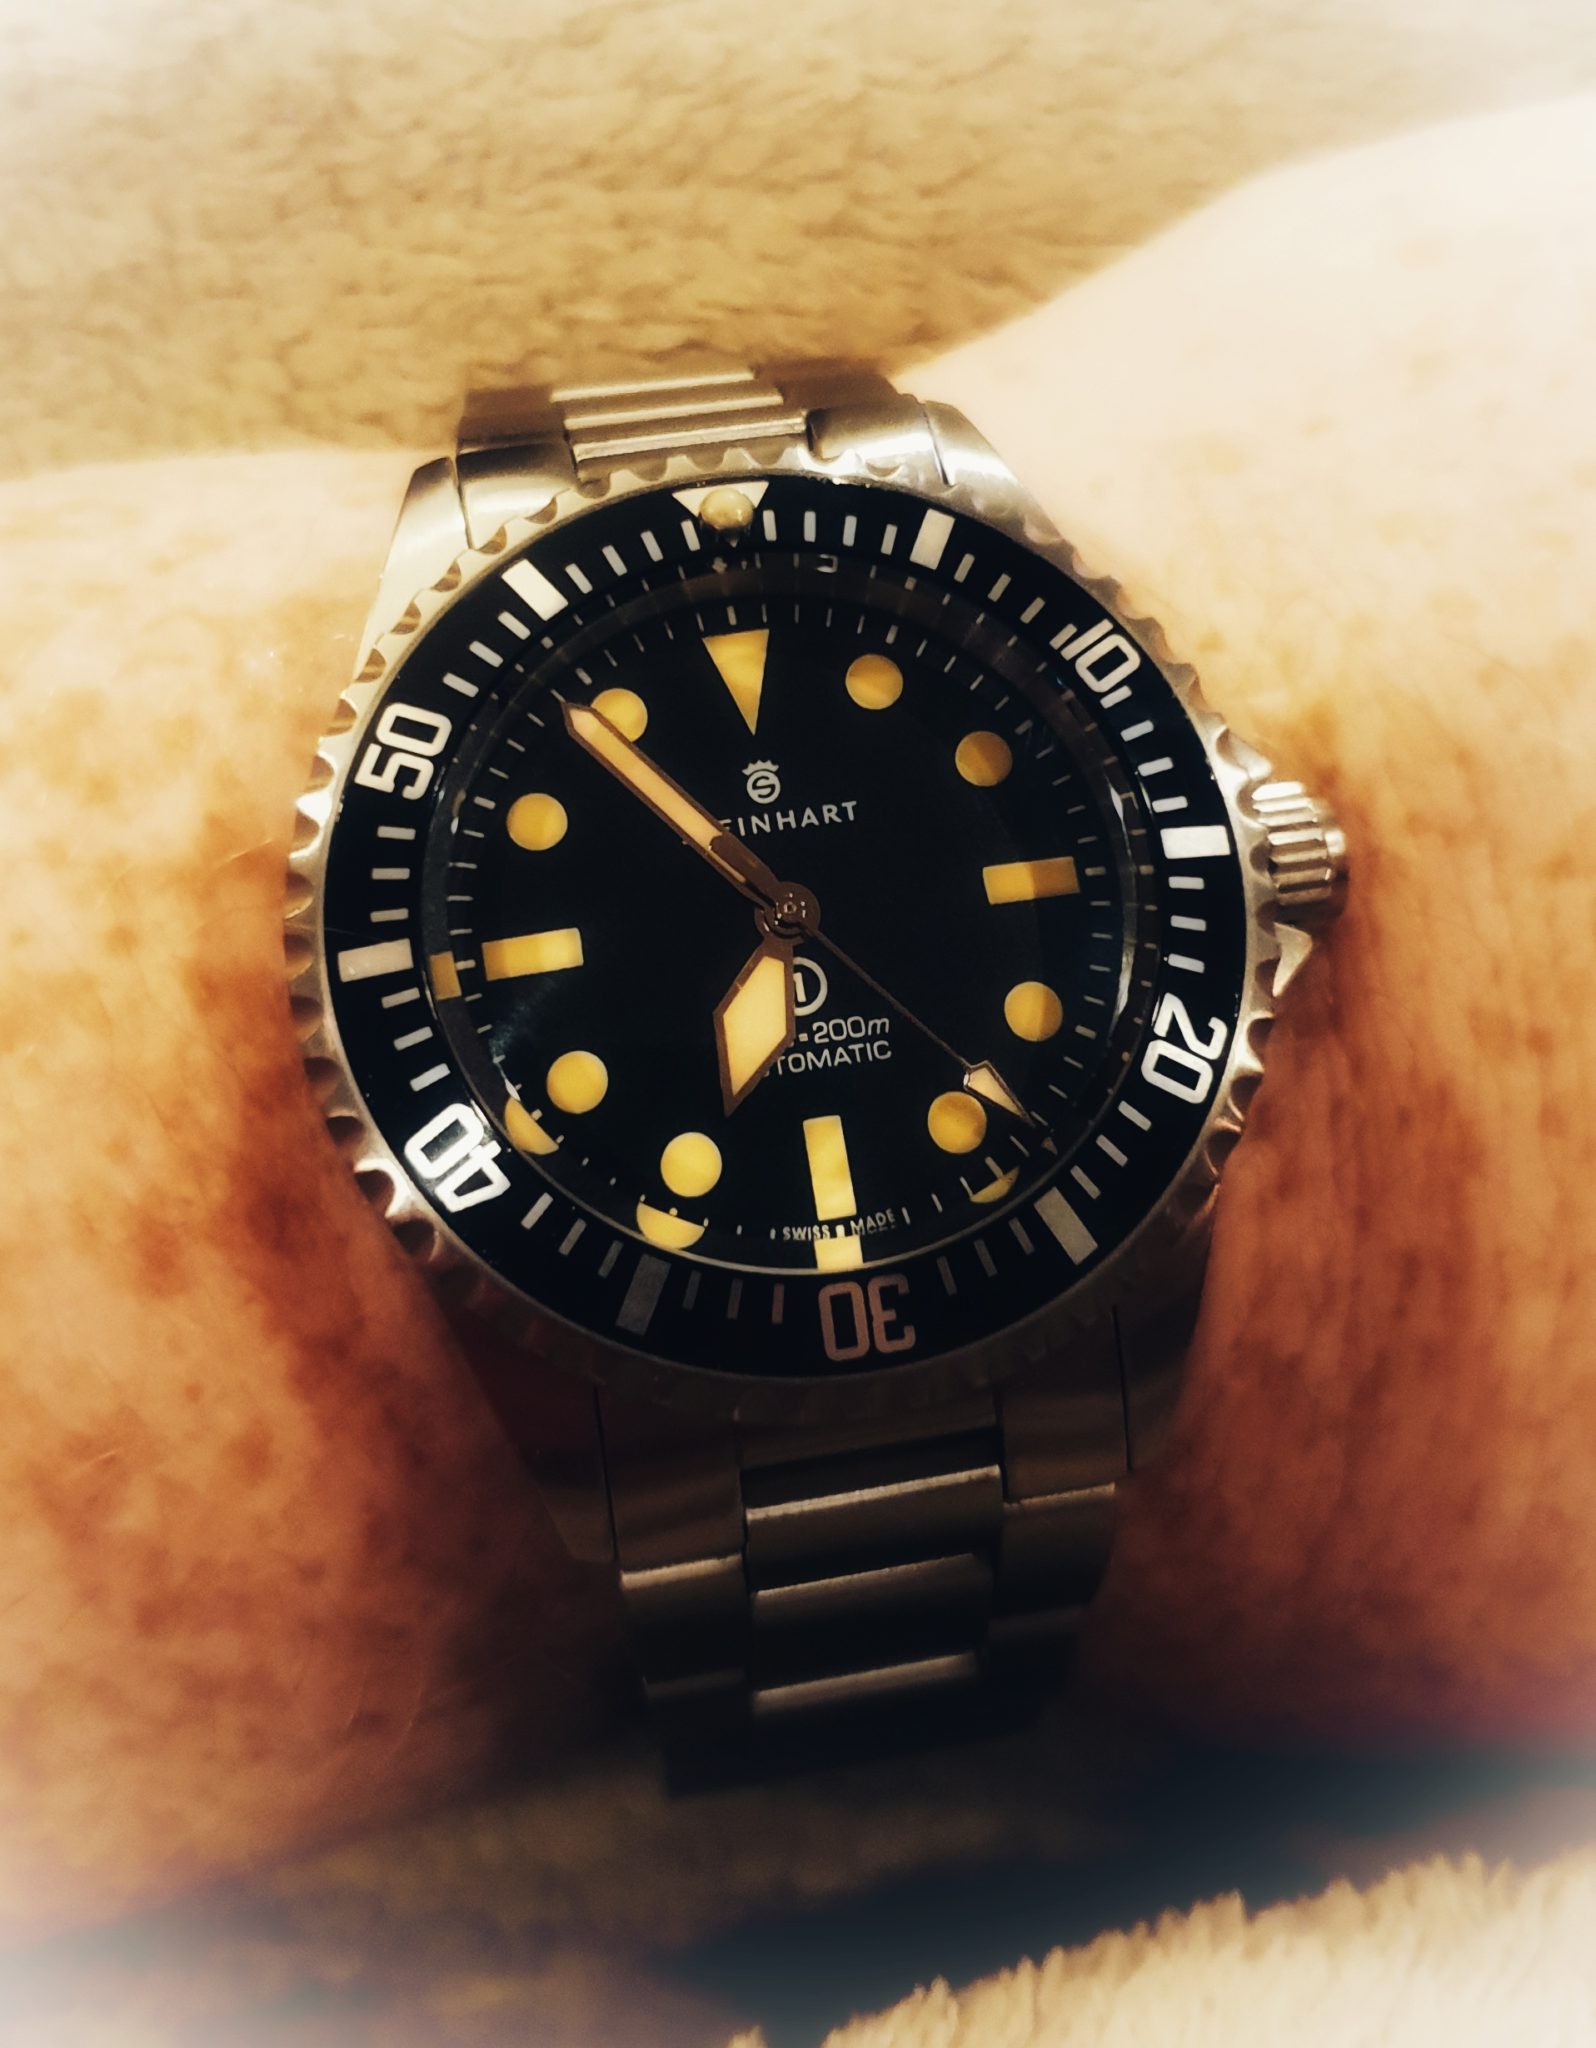 Bamford Heritage Rolex Milsub Watch